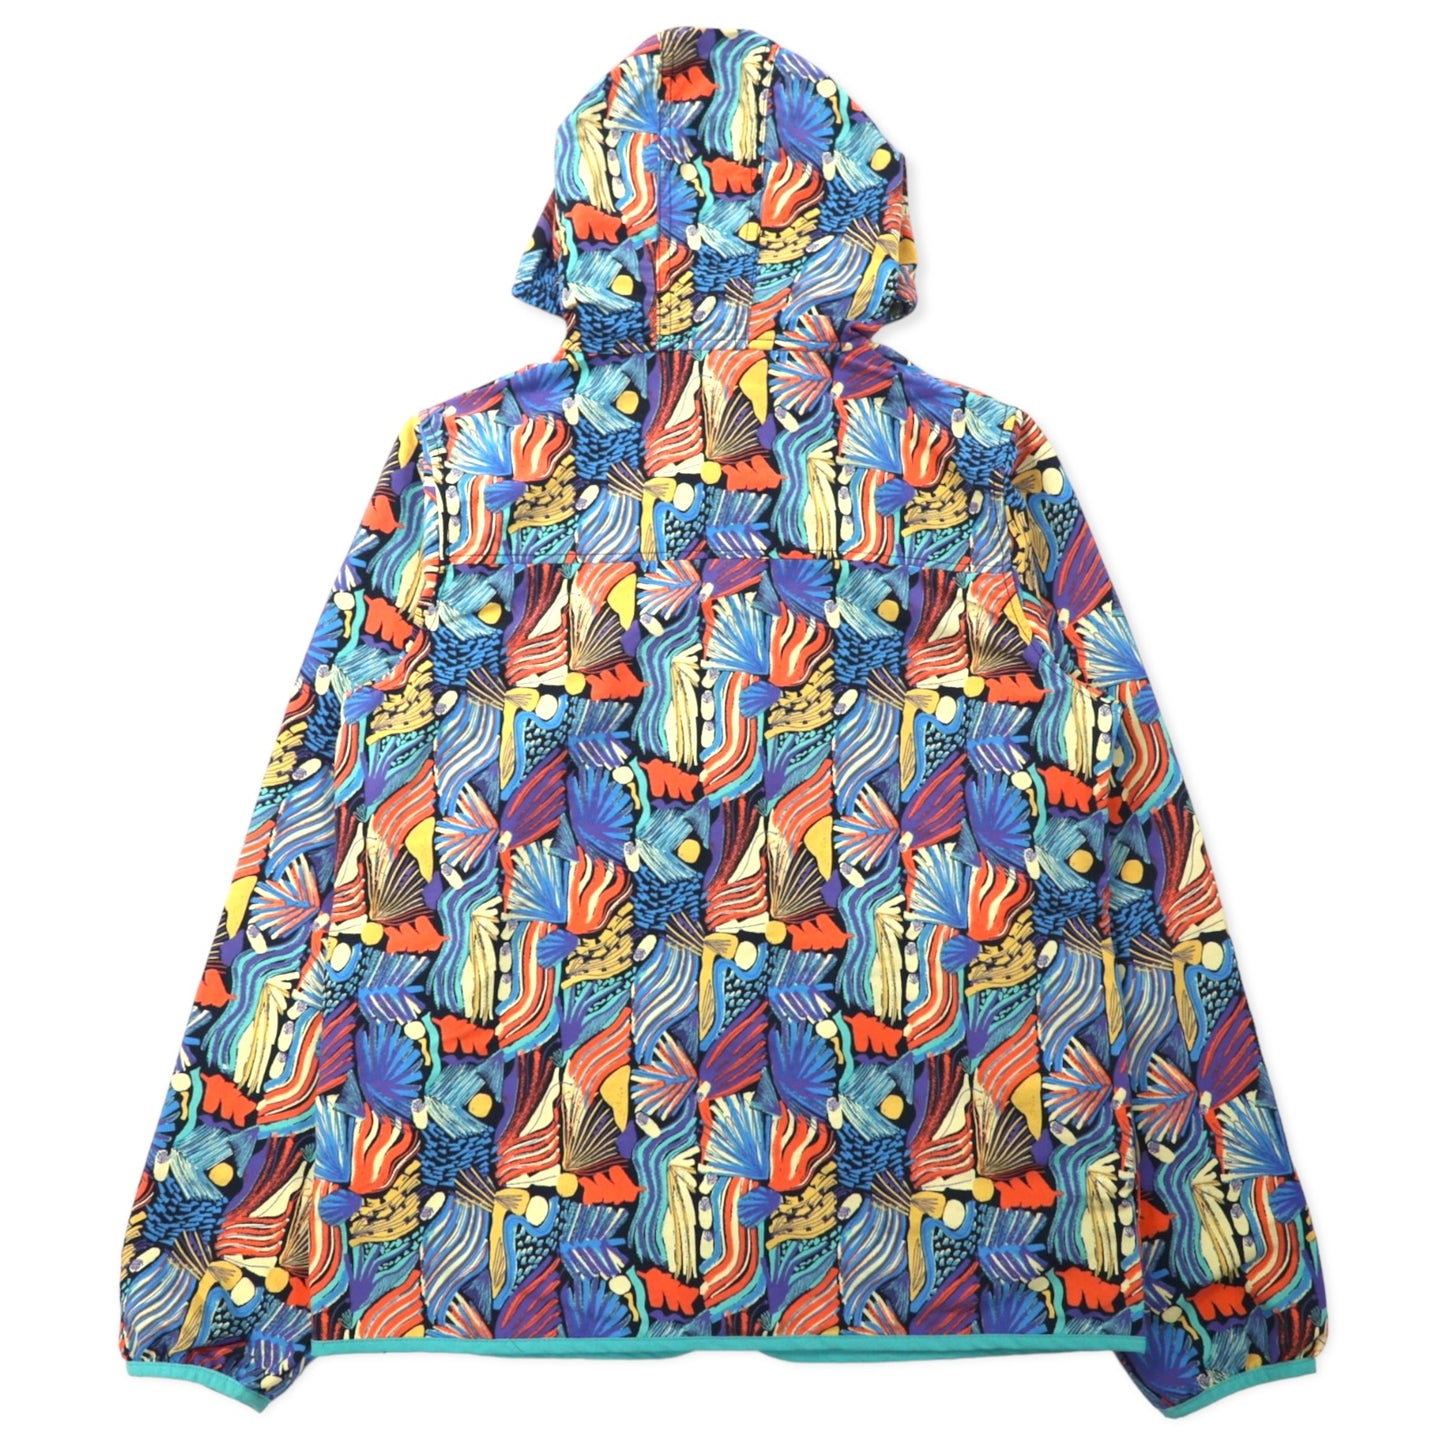 PATAGONIA Baggies Jacket Shell HOODIE XXL Multi Color Patterned